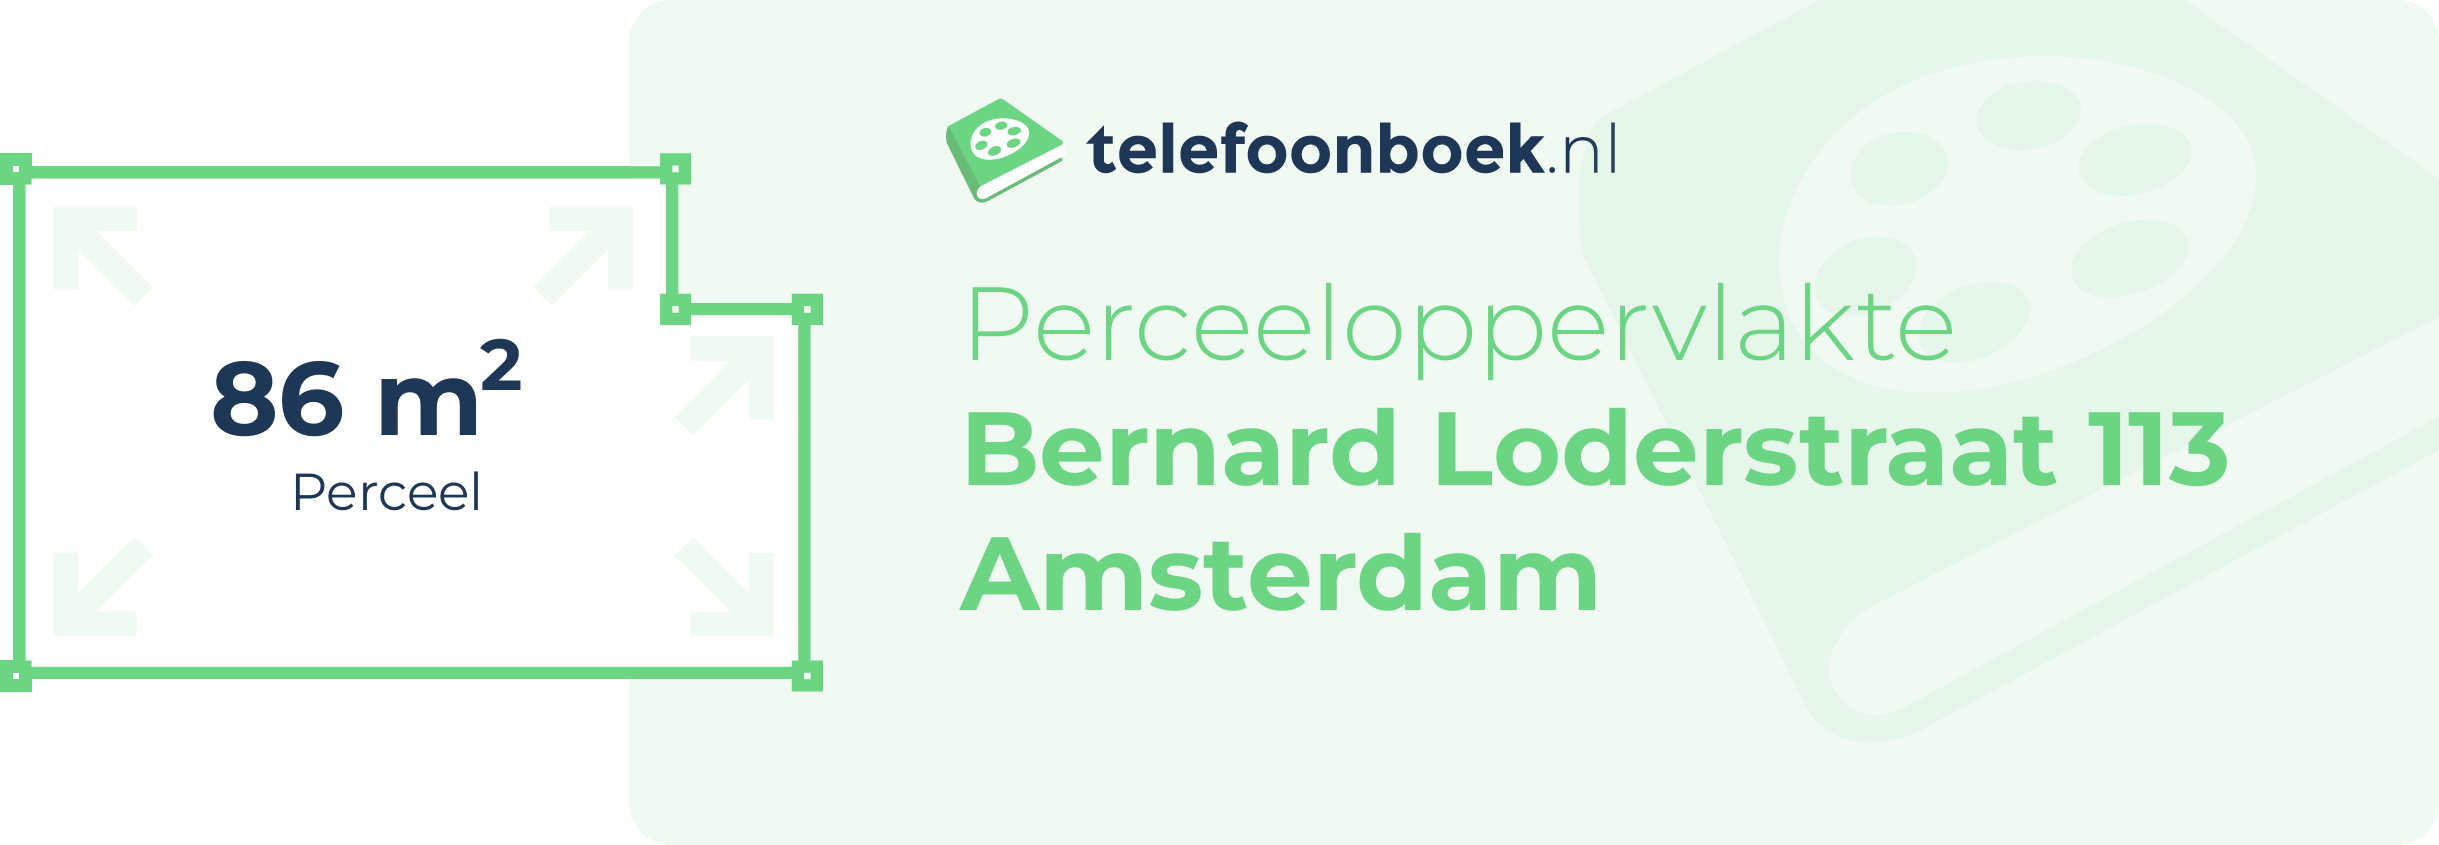 Perceeloppervlakte Bernard Loderstraat 113 Amsterdam